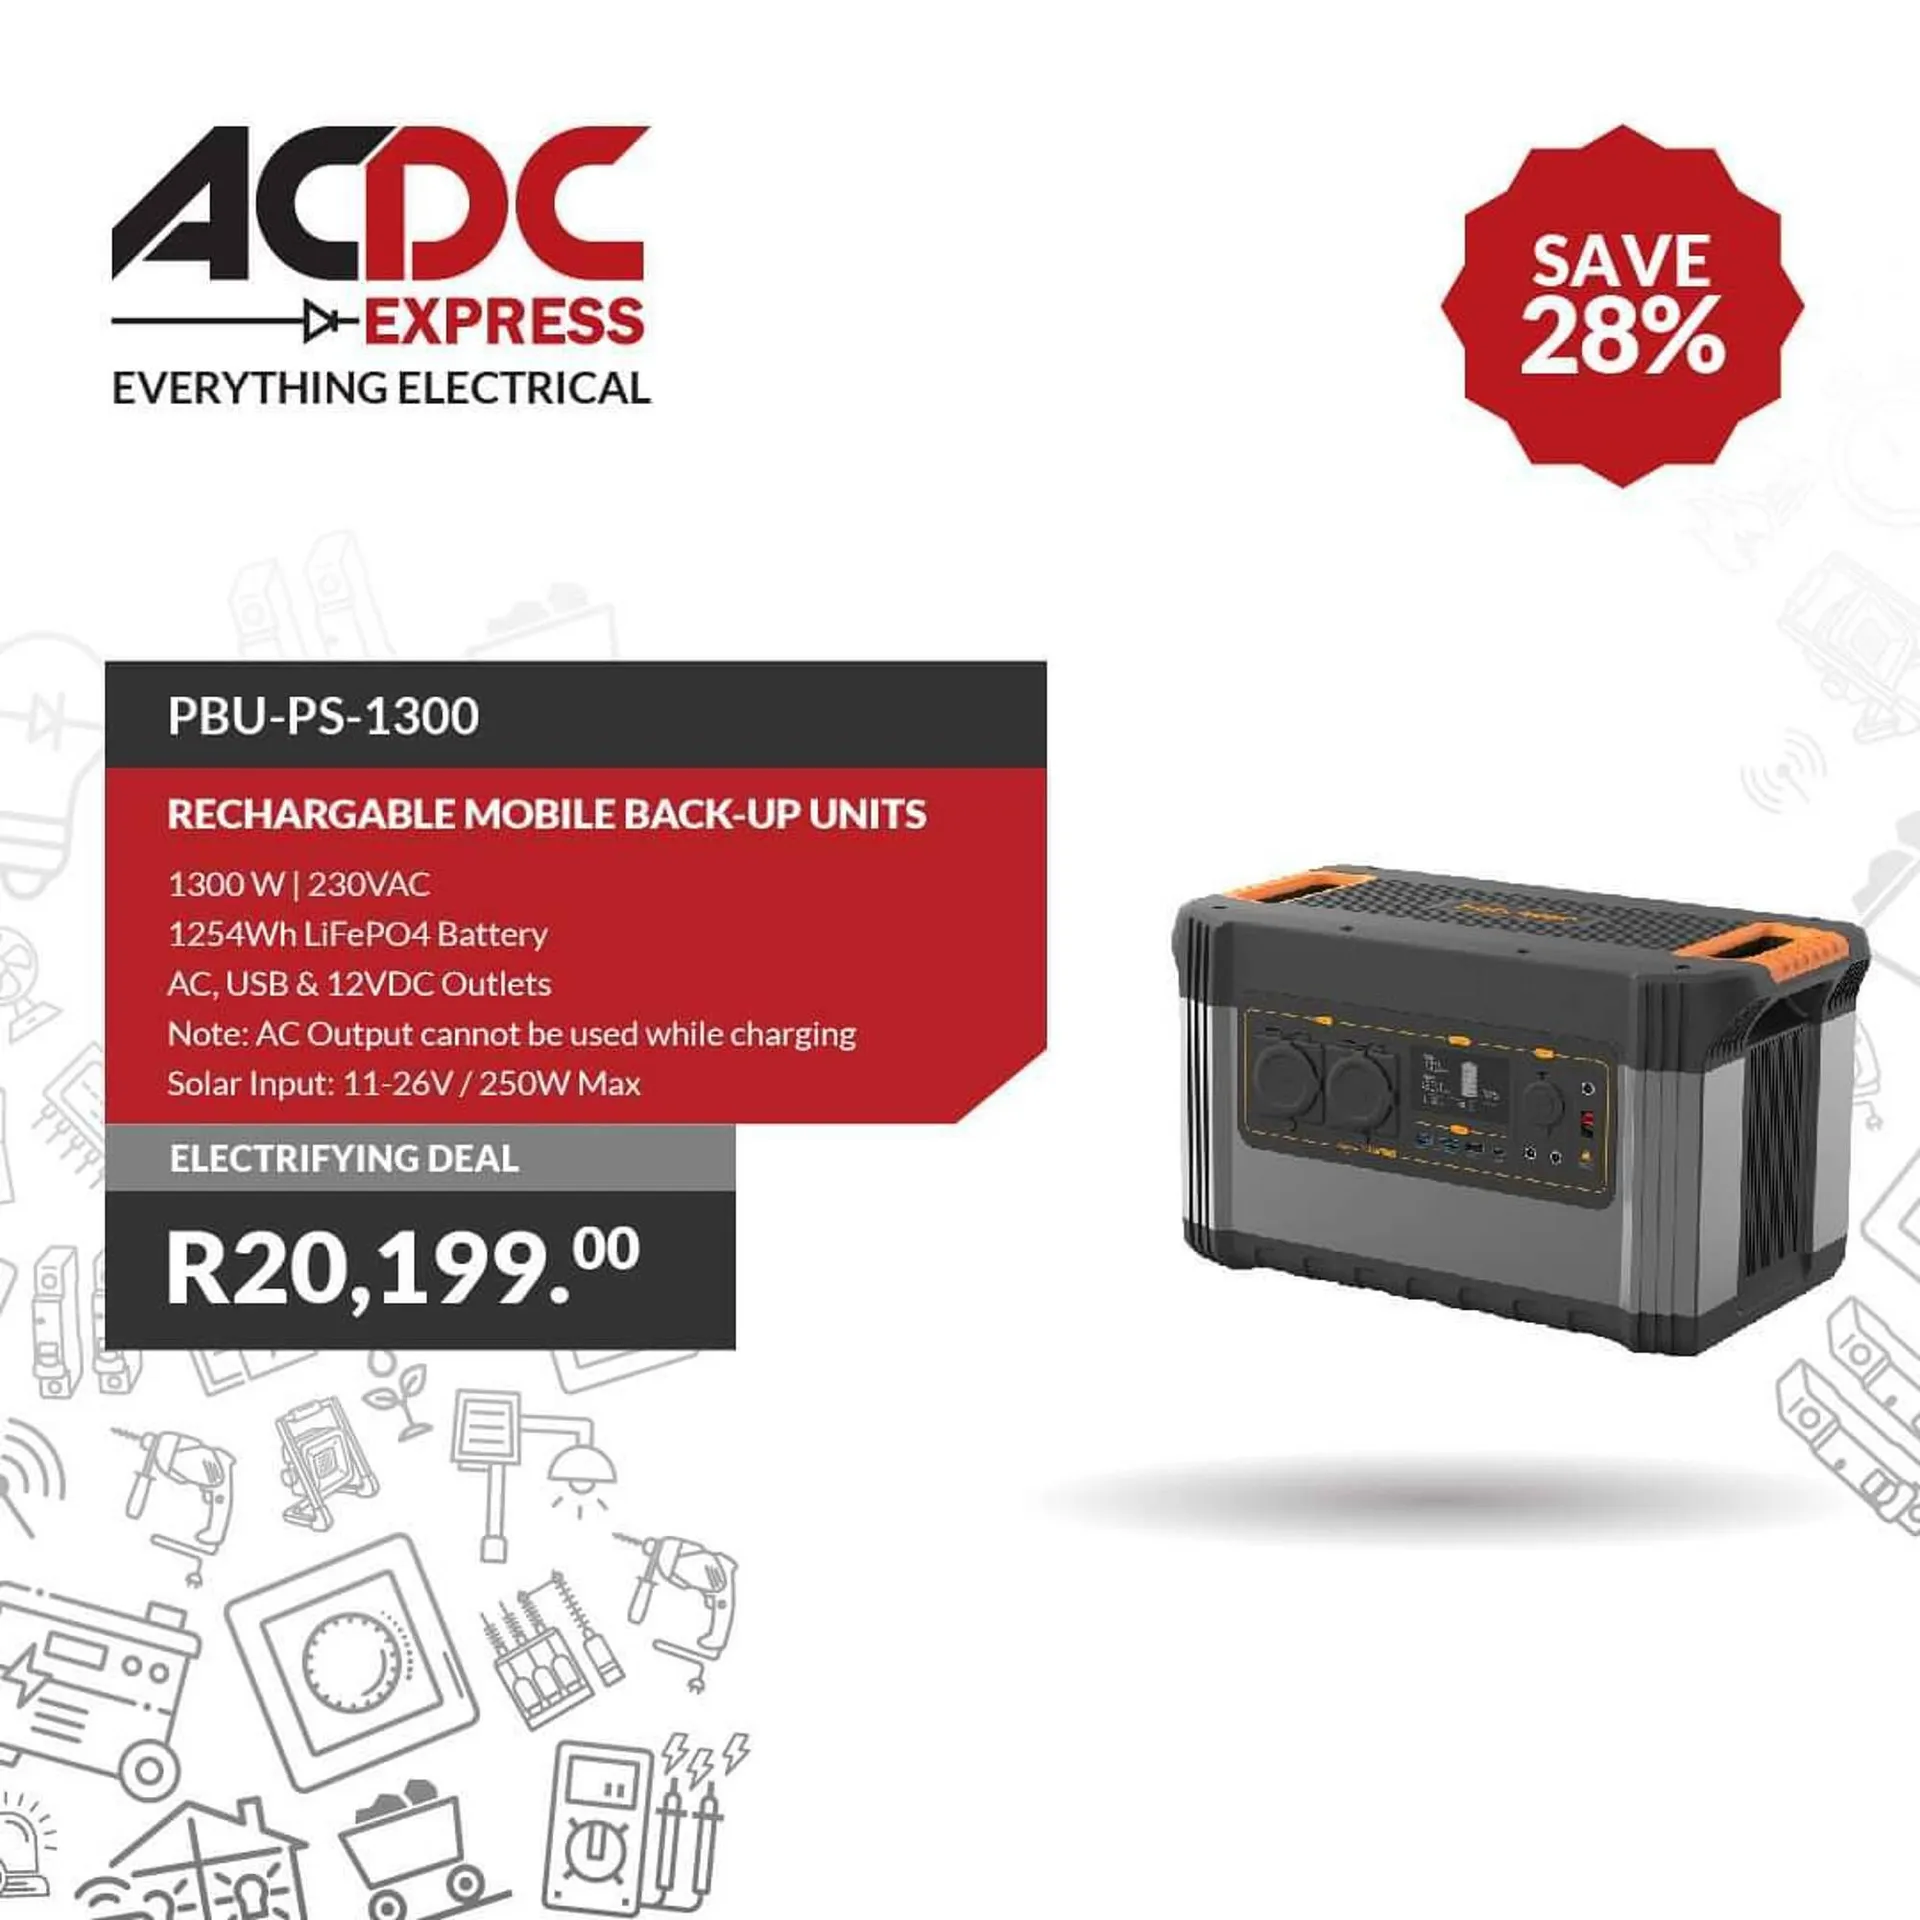 ACDC Express catalogue - 1